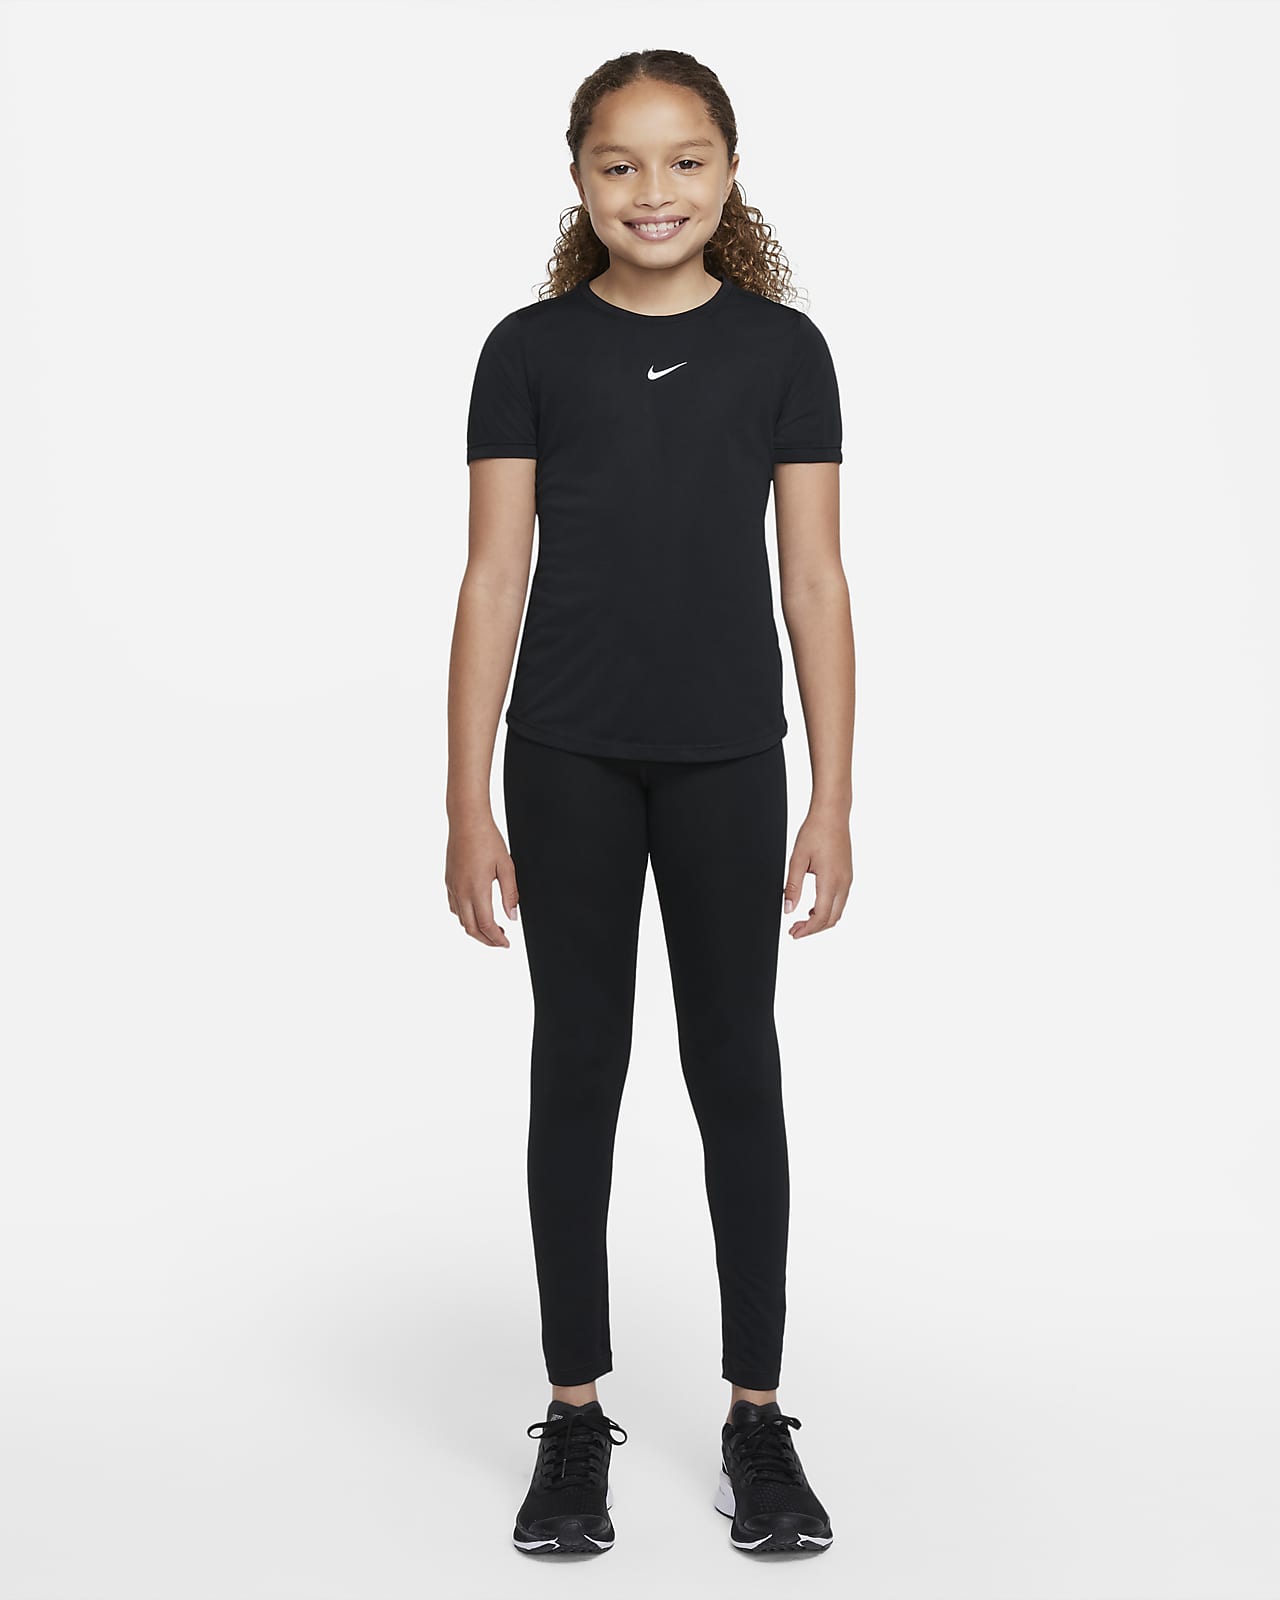 Nike Kids\' Big Top. (Girls\') One Short-Sleeve